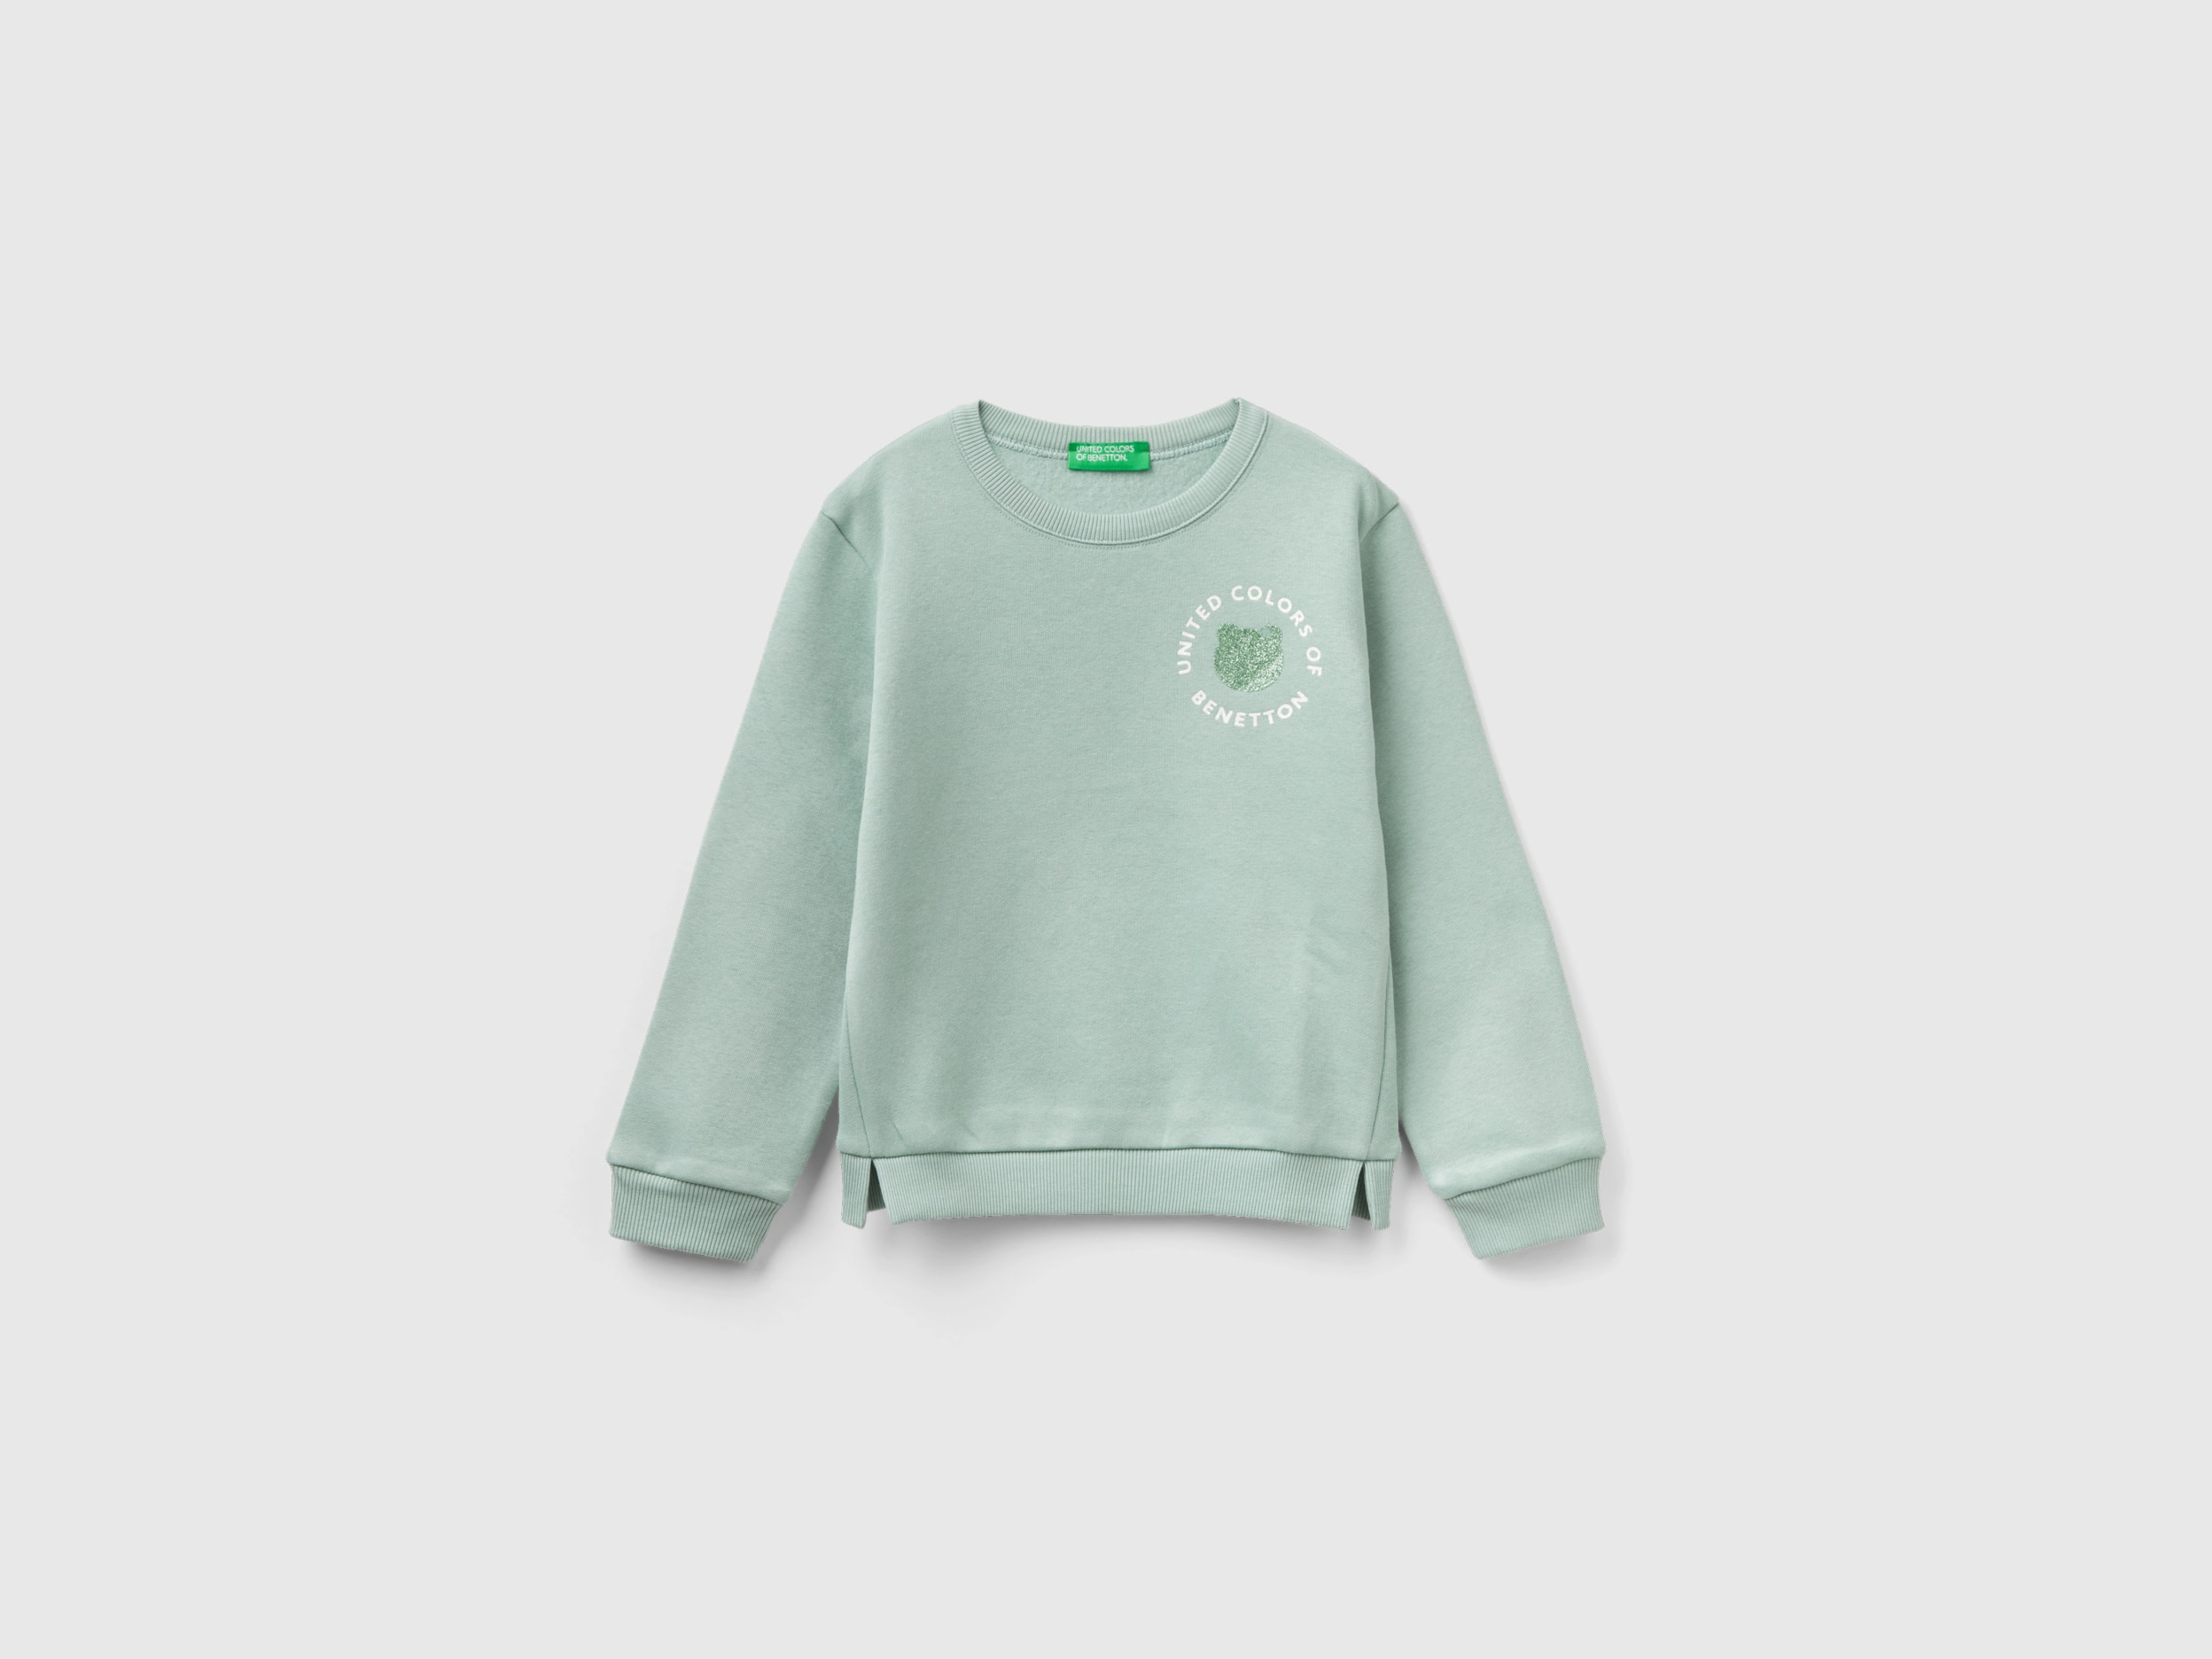 Benetton, Pullover Sweatshirt With Glittery Print, size 4-5, Aqua, Kids